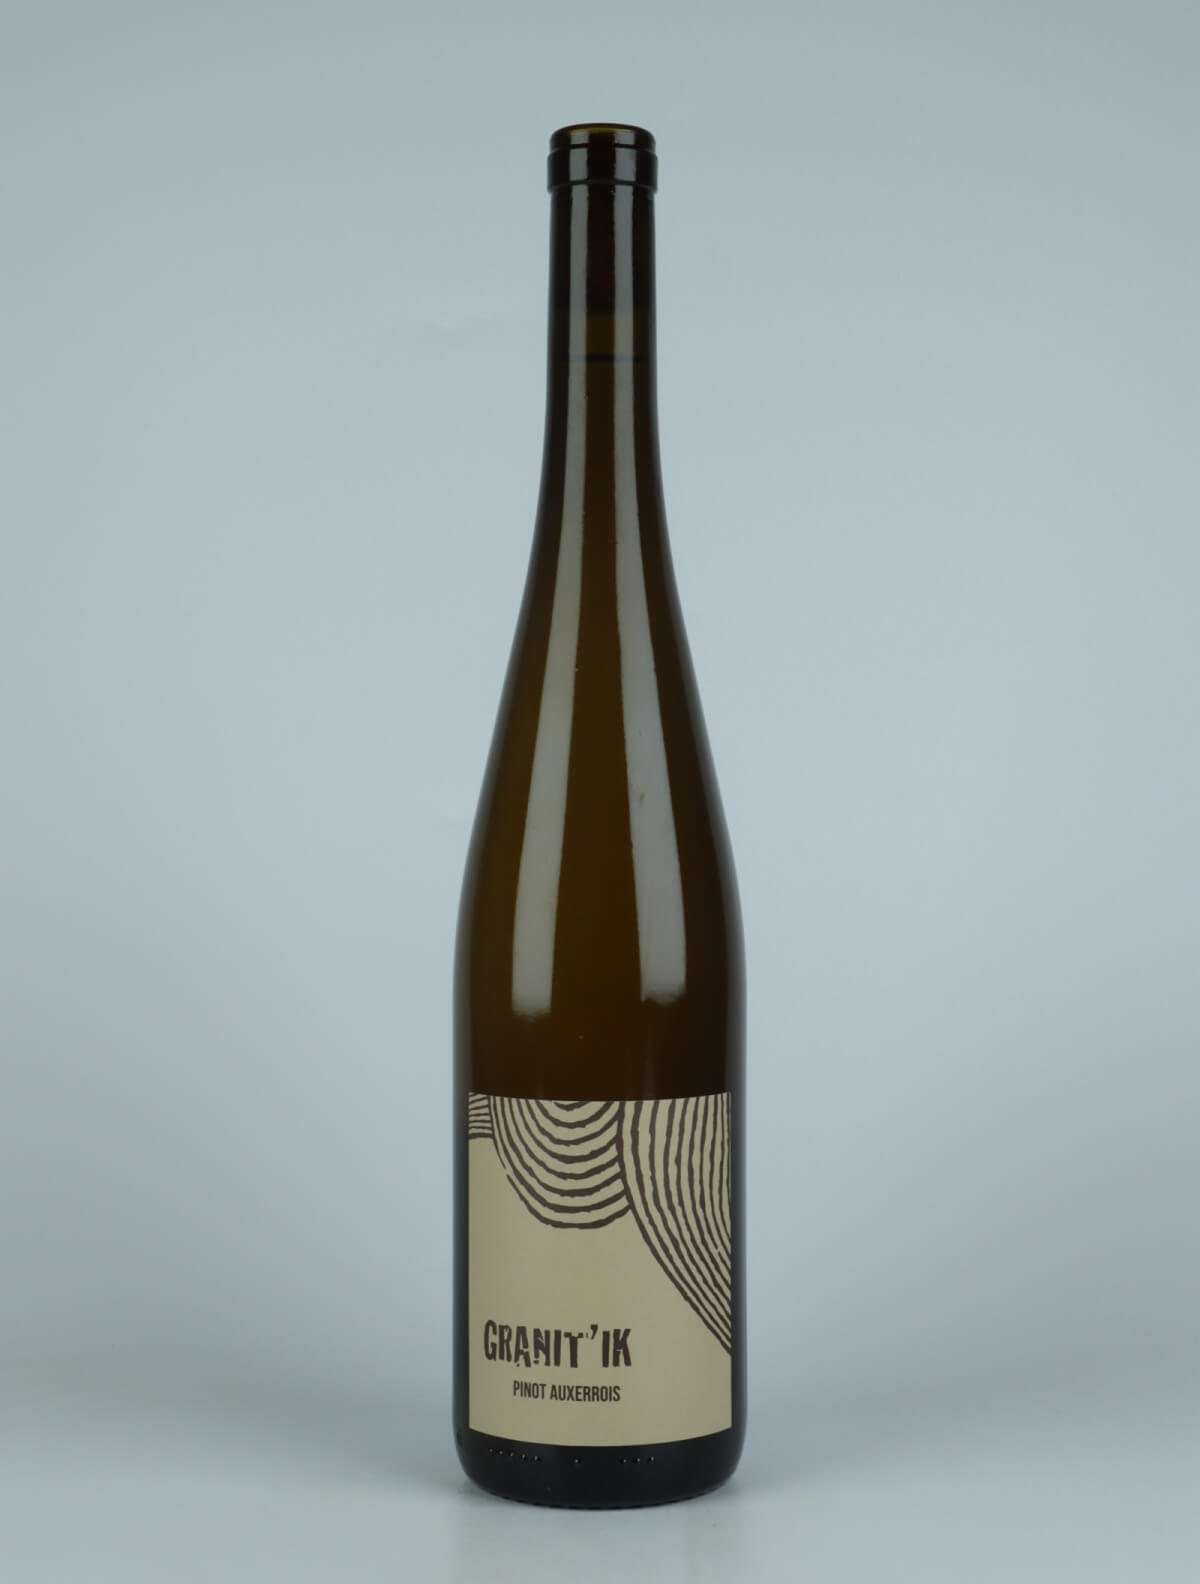 A bottle N.V. Granit'iK (19/20/21) White wine from Ruhlmann Dirringer, Alsace in France